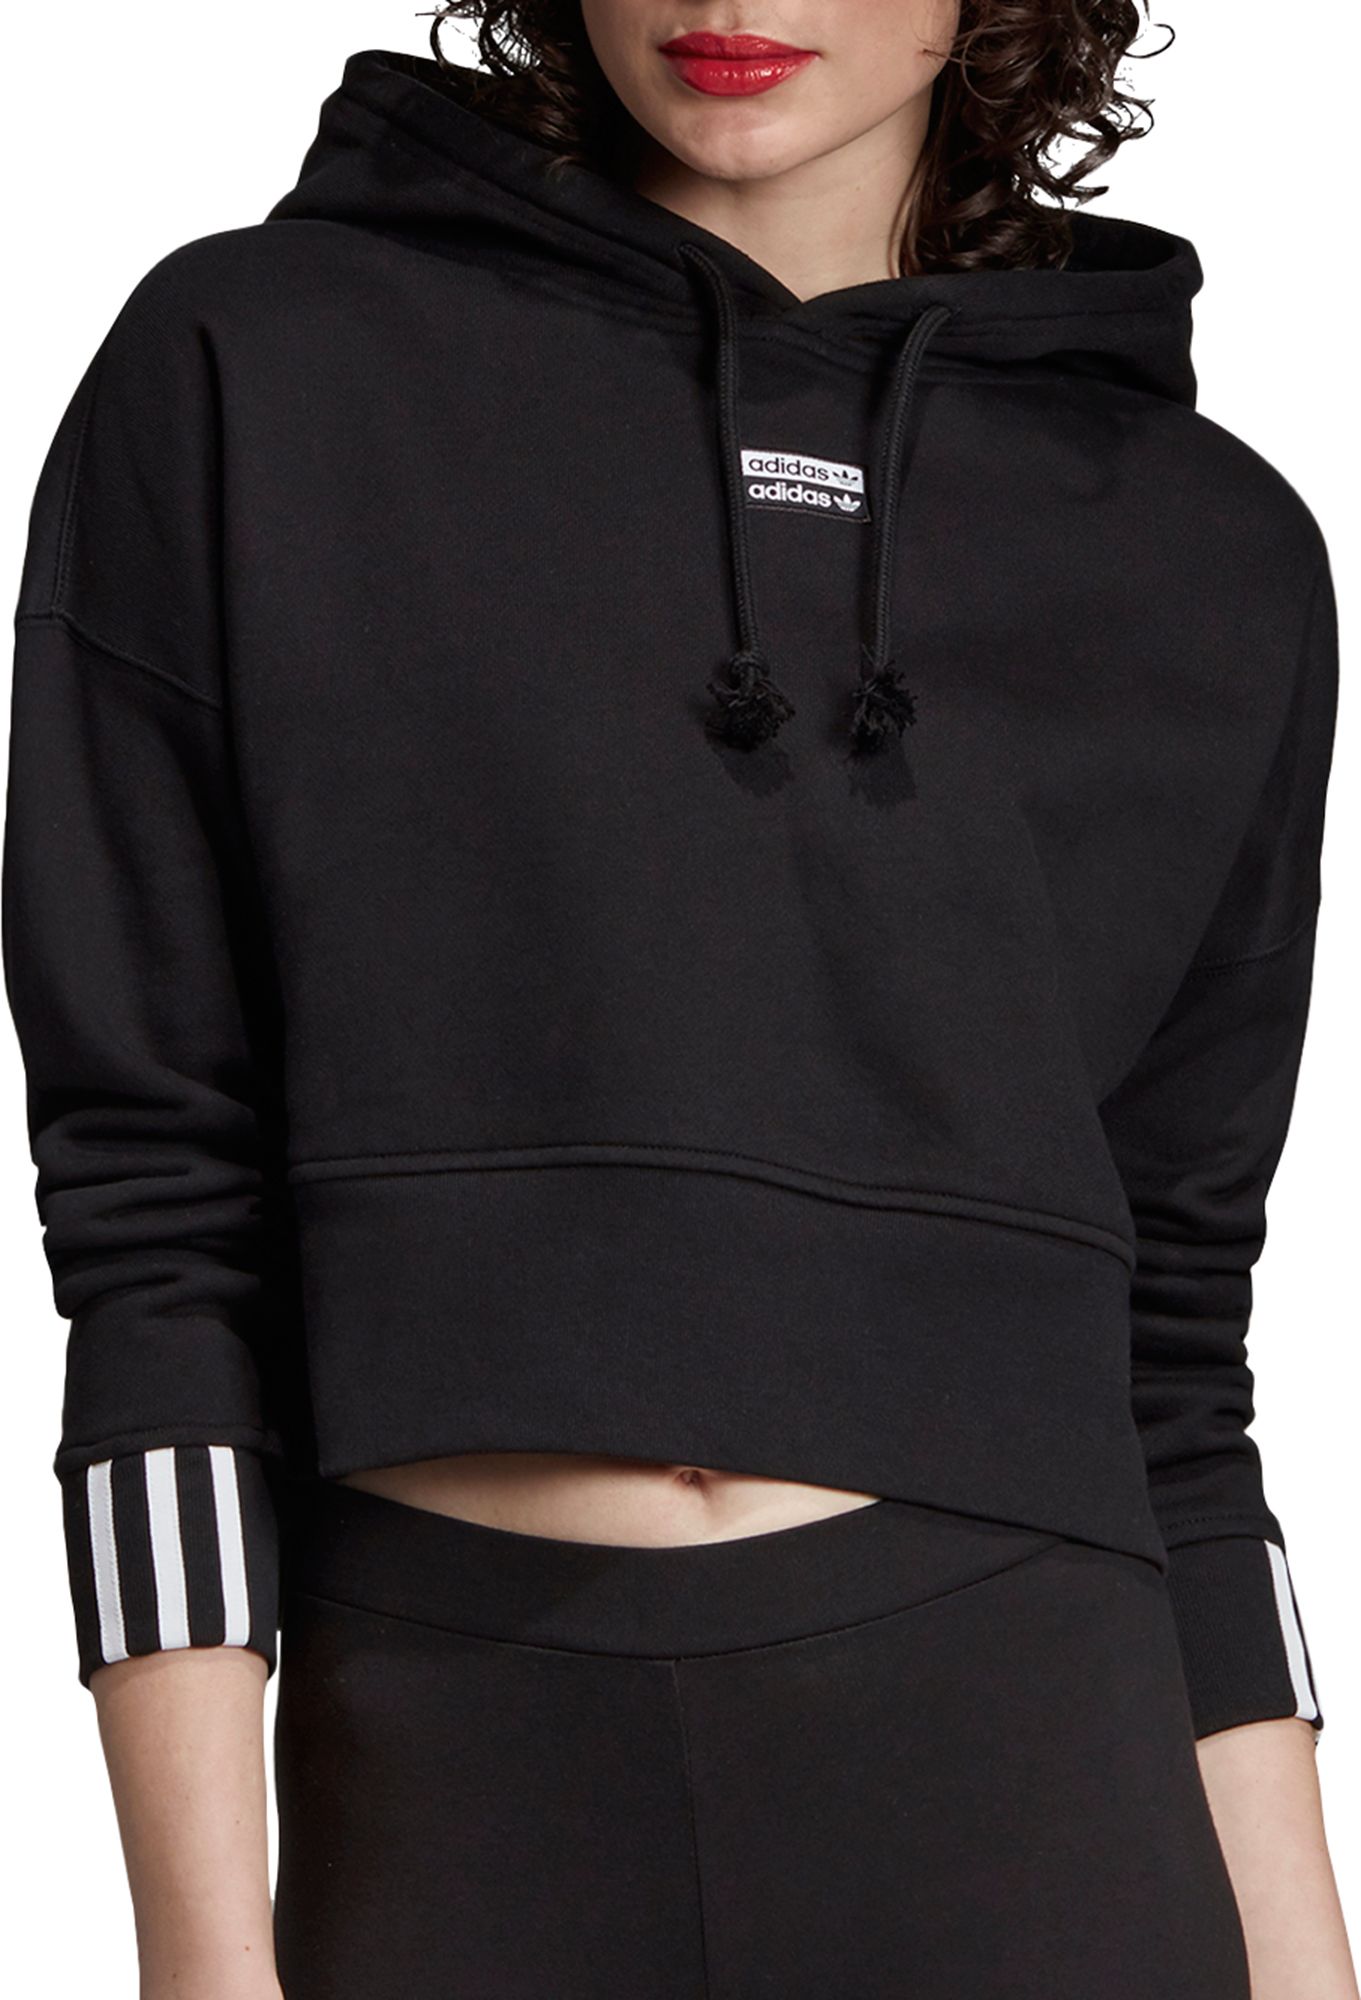 adidas originals women's cropped hooded sweatshirt